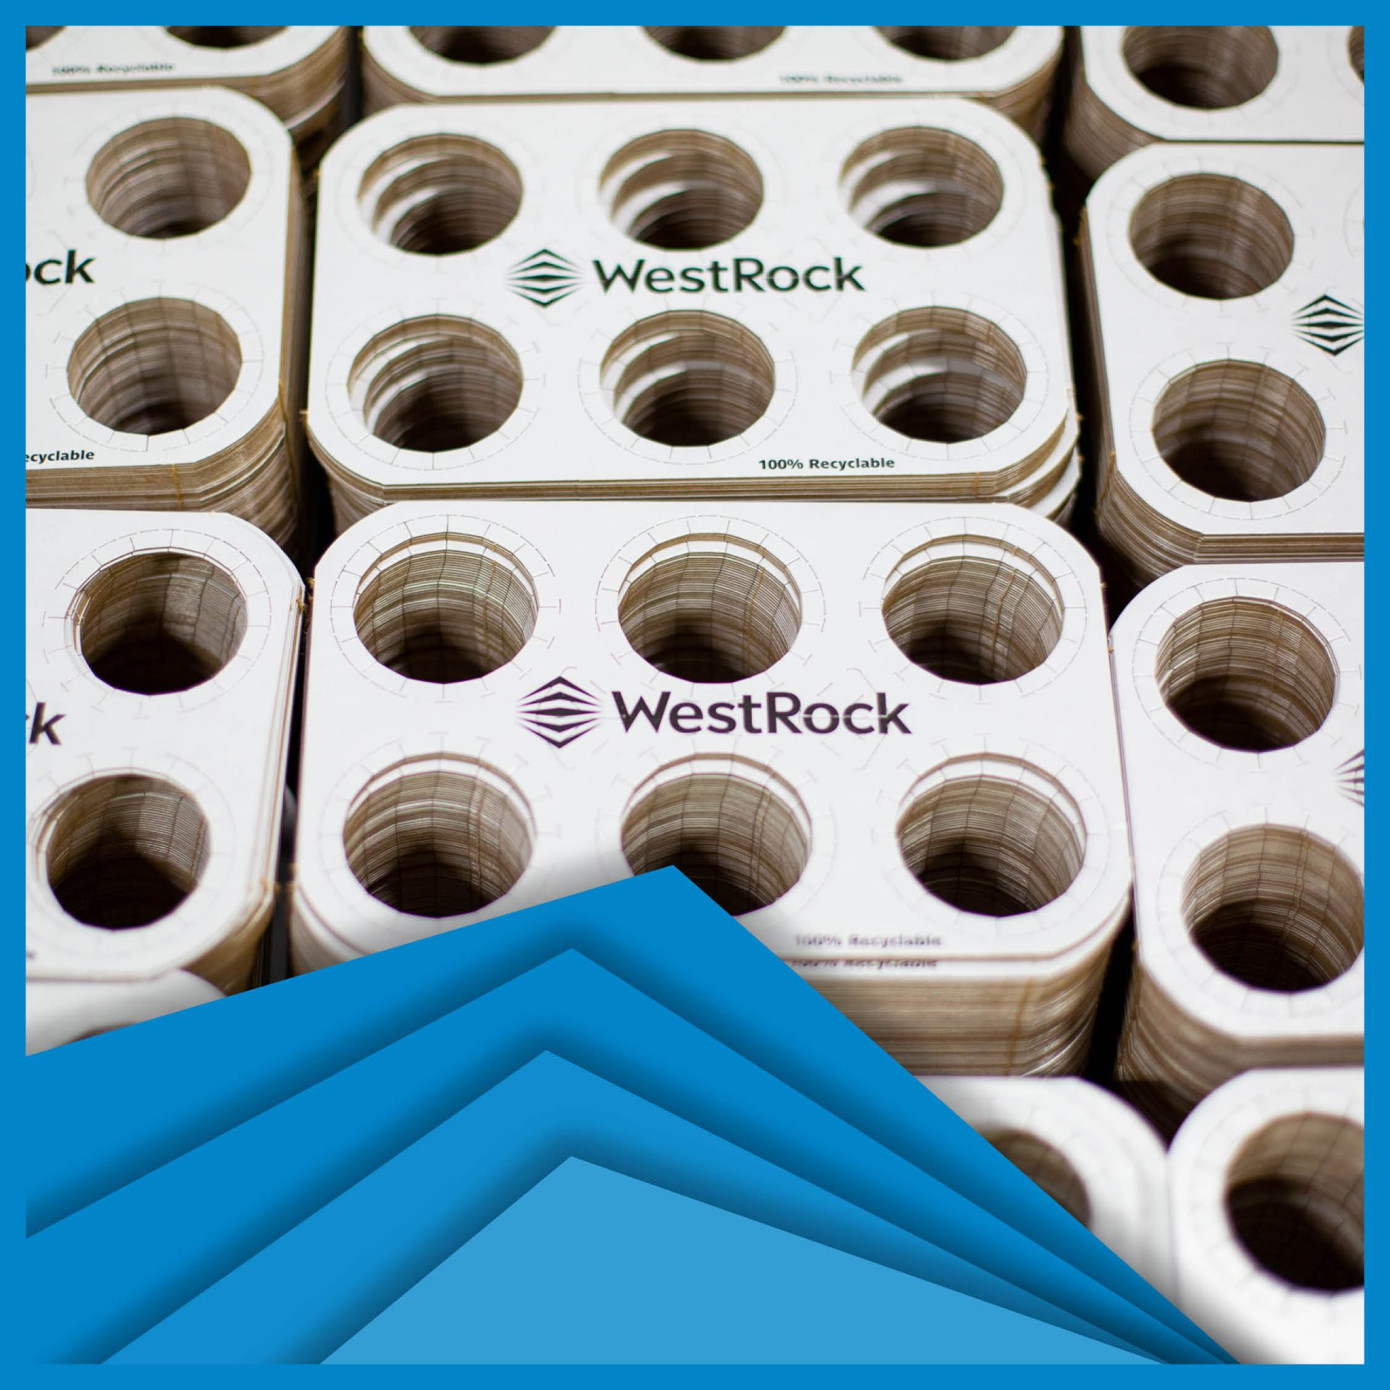 WestRock to close Tacoma, Washington, paper mill